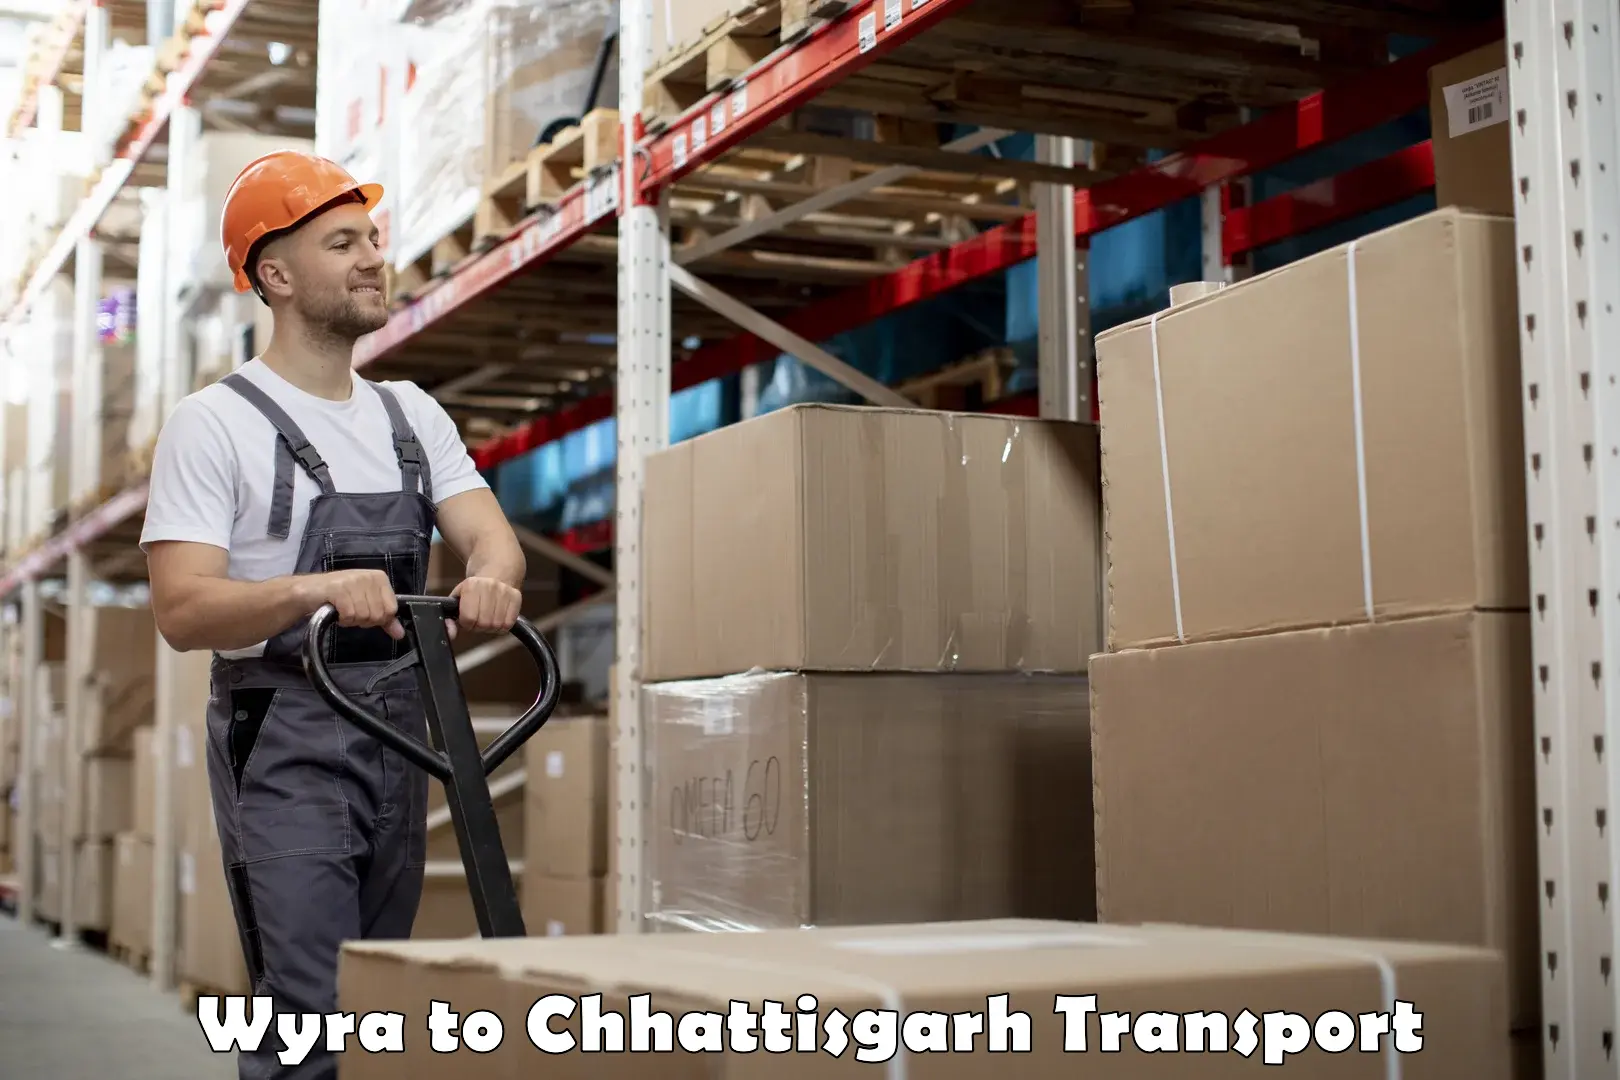 Truck transport companies in India Wyra to Wadrafnagar